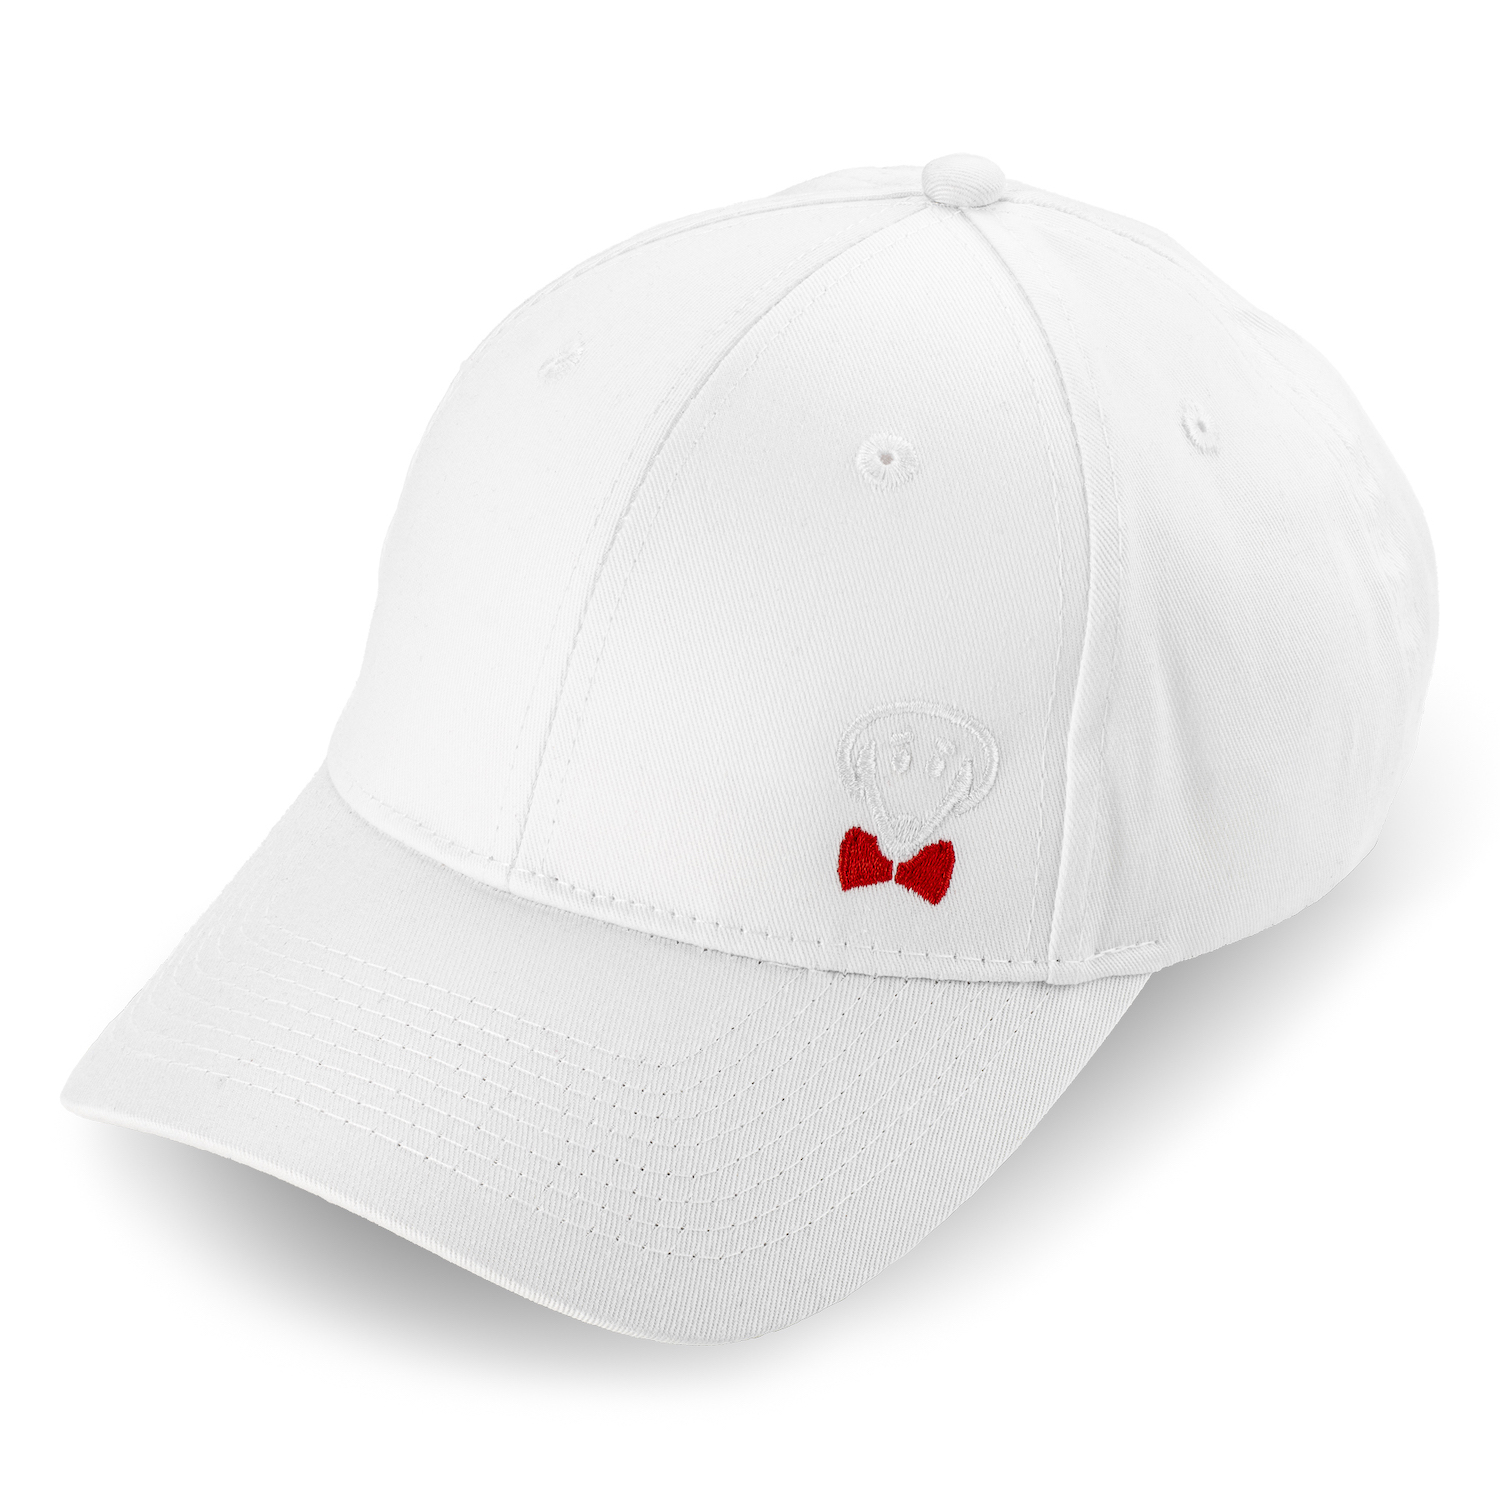 Beau Tyler - Austin hat white front